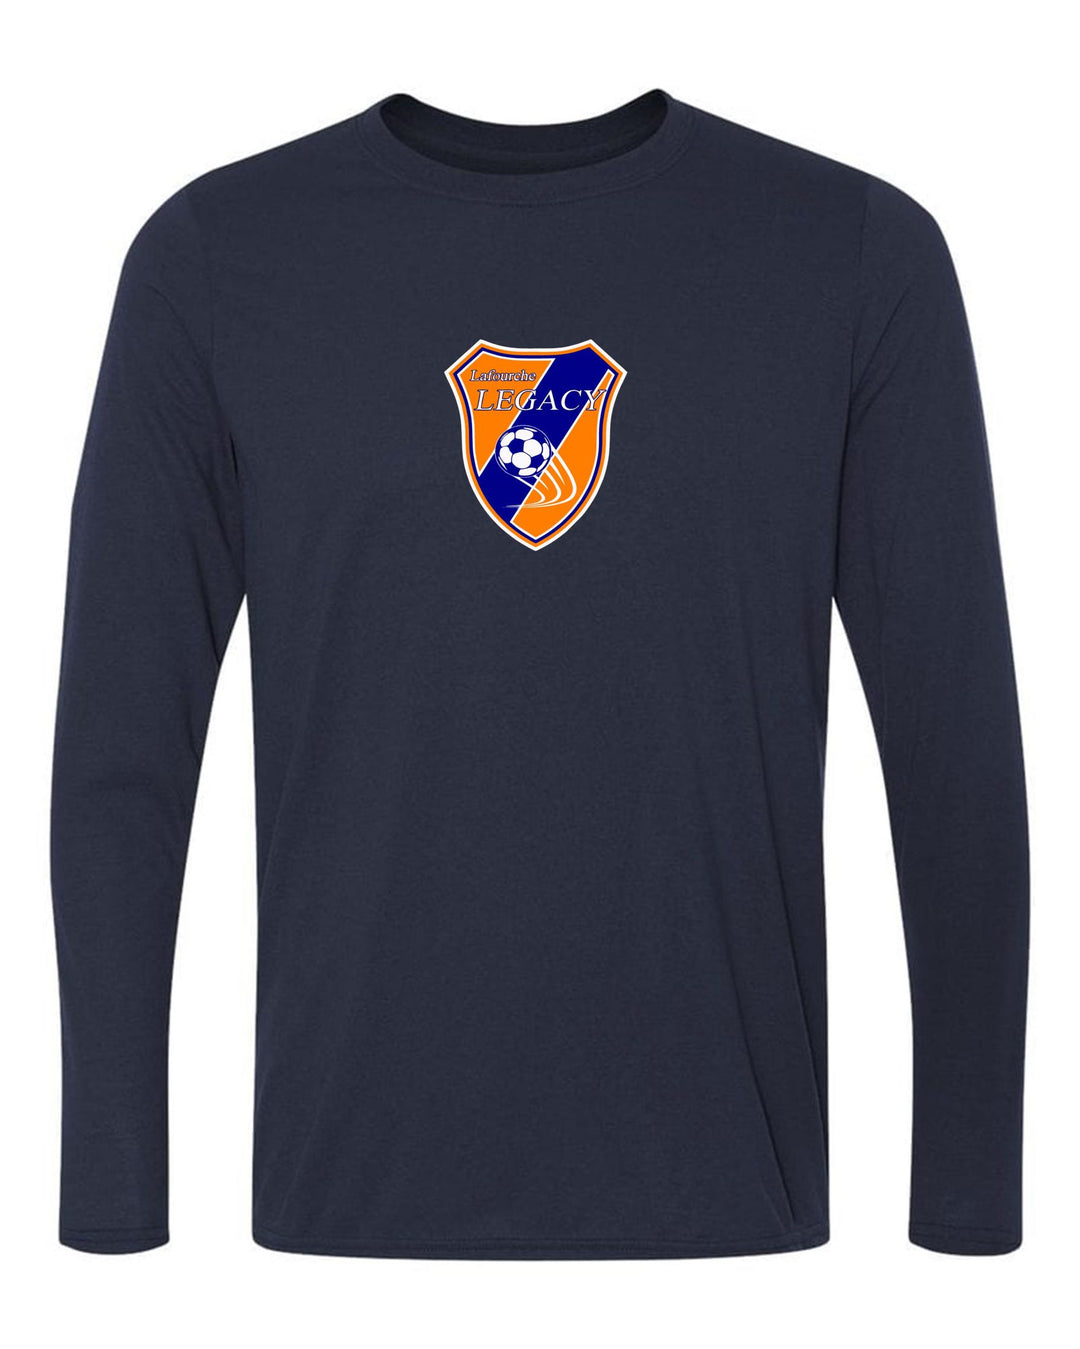 Lefourche Legacy Long-sleeve T-shirt - Navy or Orange  MENS SMALL NAVY - Third Coast Soccer